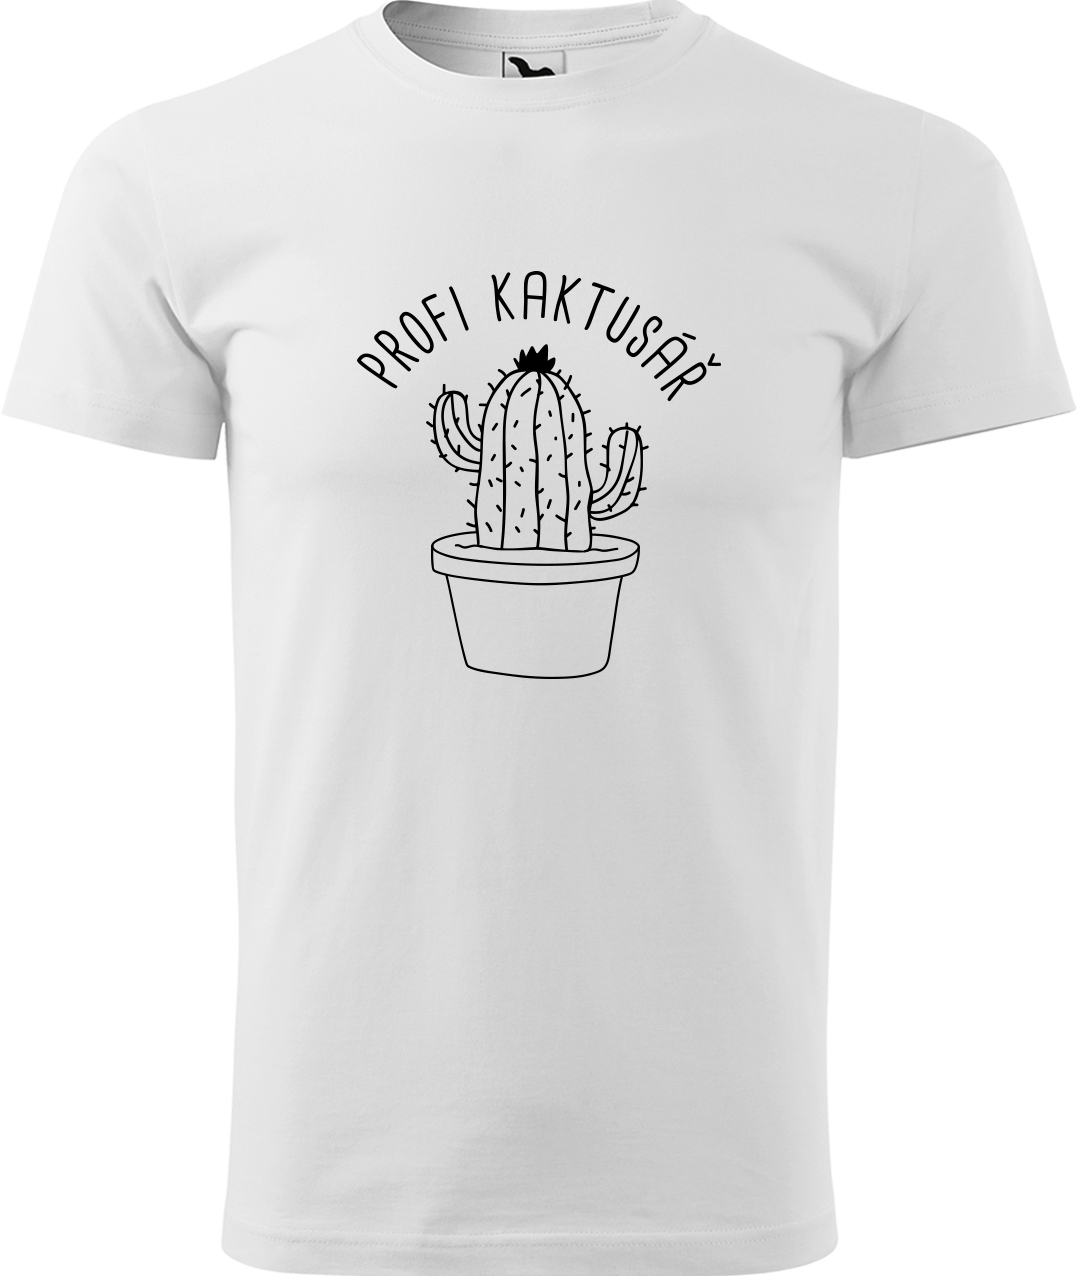 Tričko pro zahradníka - Profi kaktusář Velikost: 4XL, Barva: Bílá (00), Střih: pánský